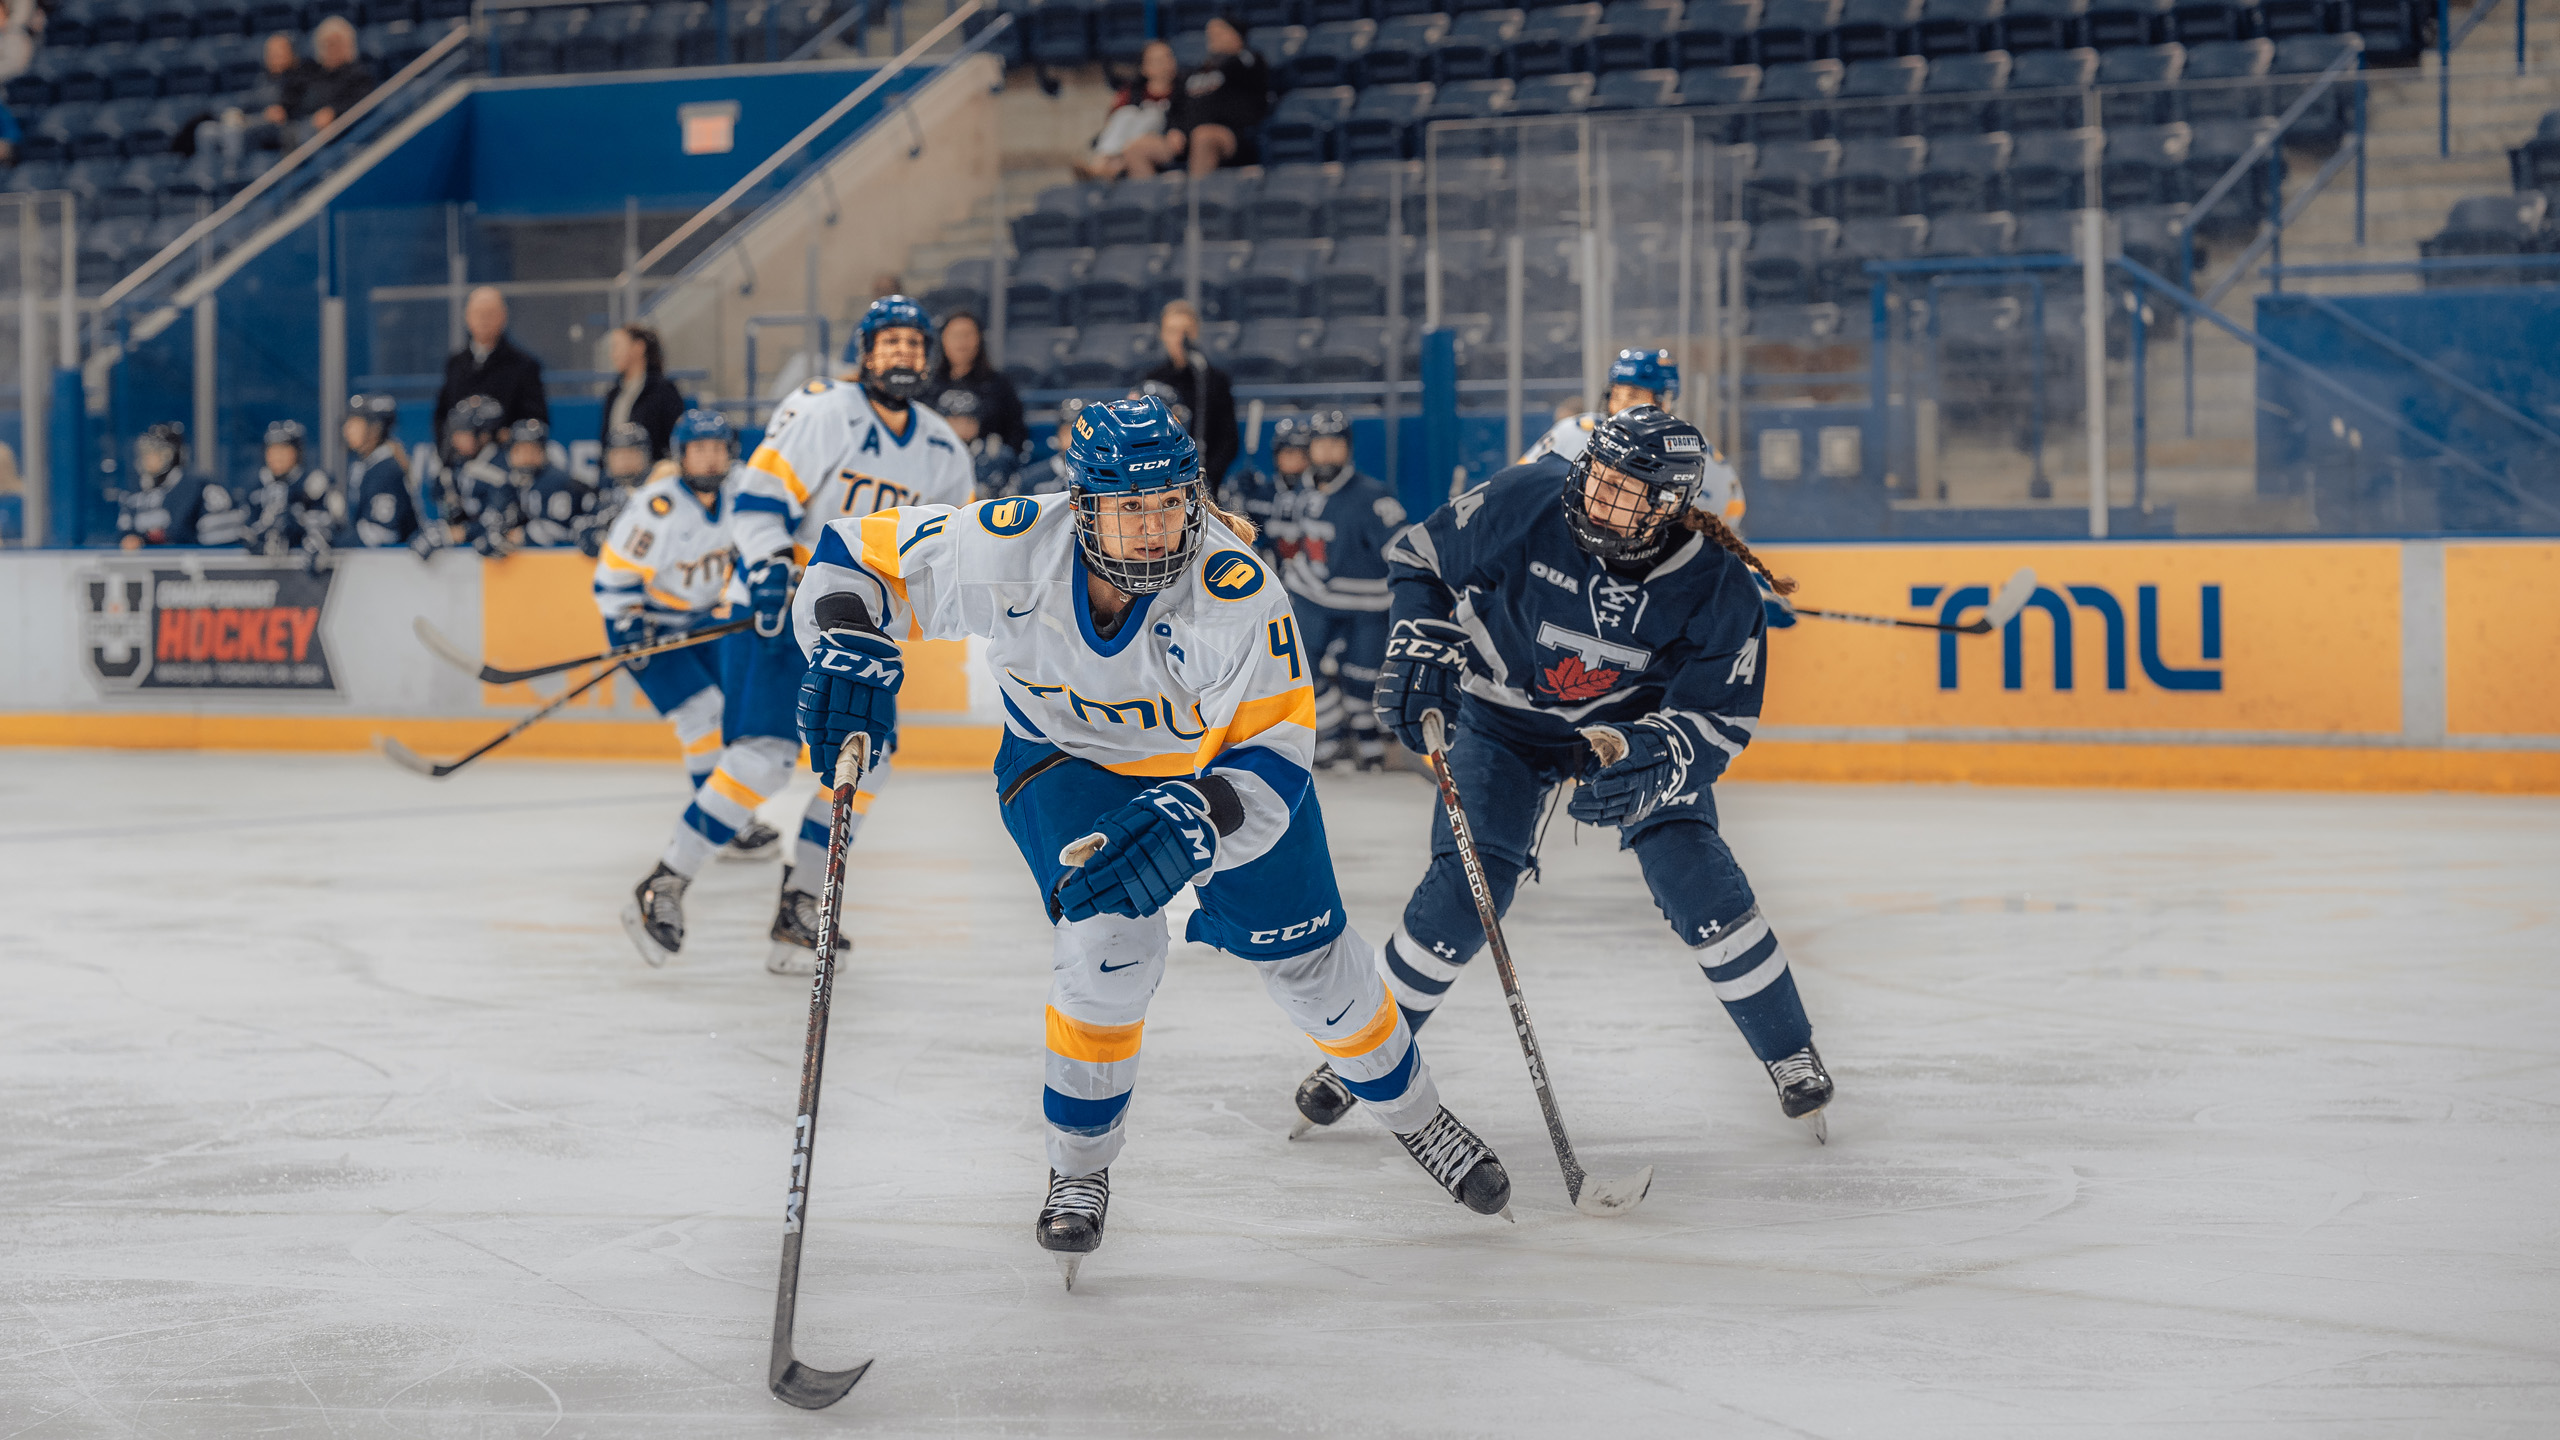 TMU women's hockey defender Lauren McEachen skates into the corner